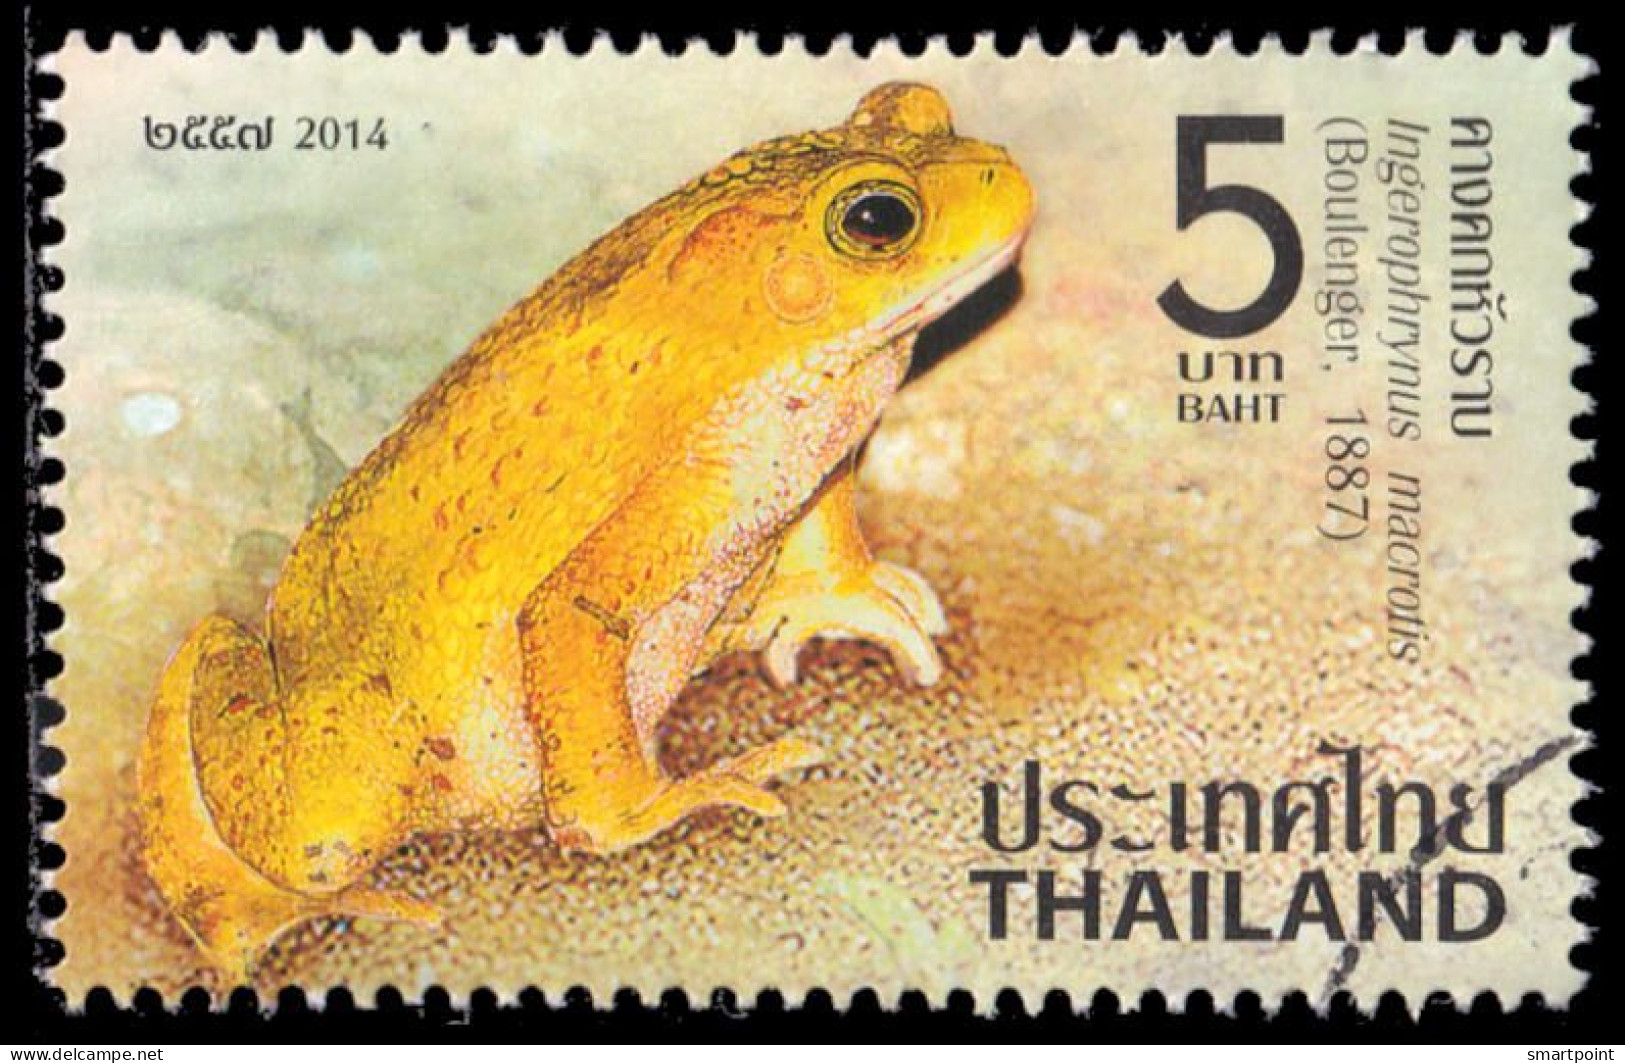 Thailand Stamp 2014 Amphibians 5 Baht - Used - Thailand